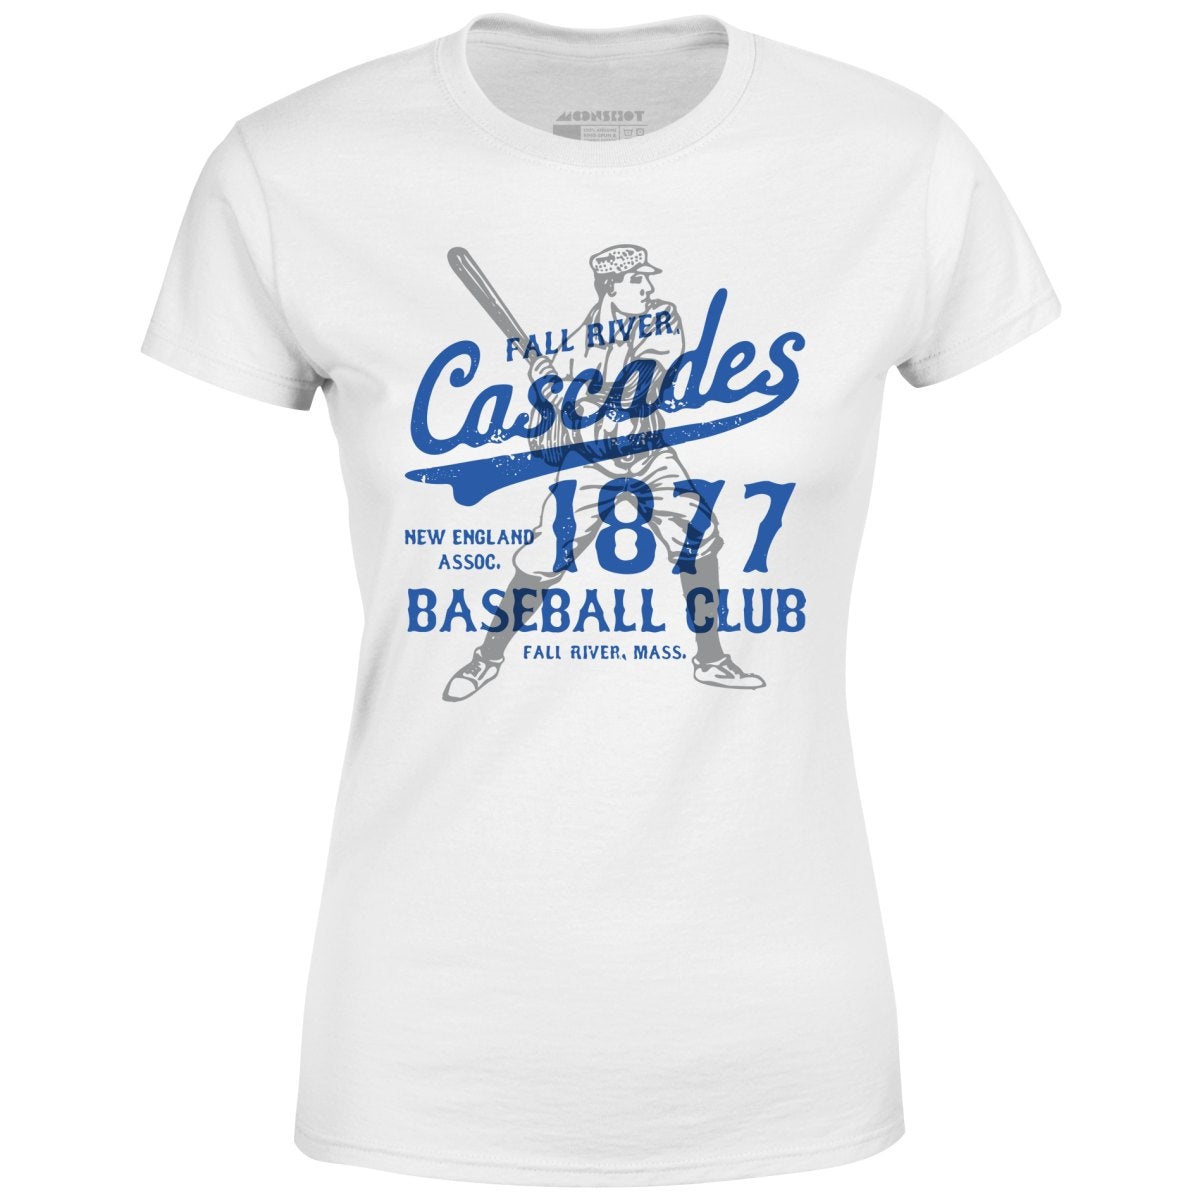 Fall River Cascades - Massachusetts - Vintage Defunct Baseball Teams - Women's T-Shirt